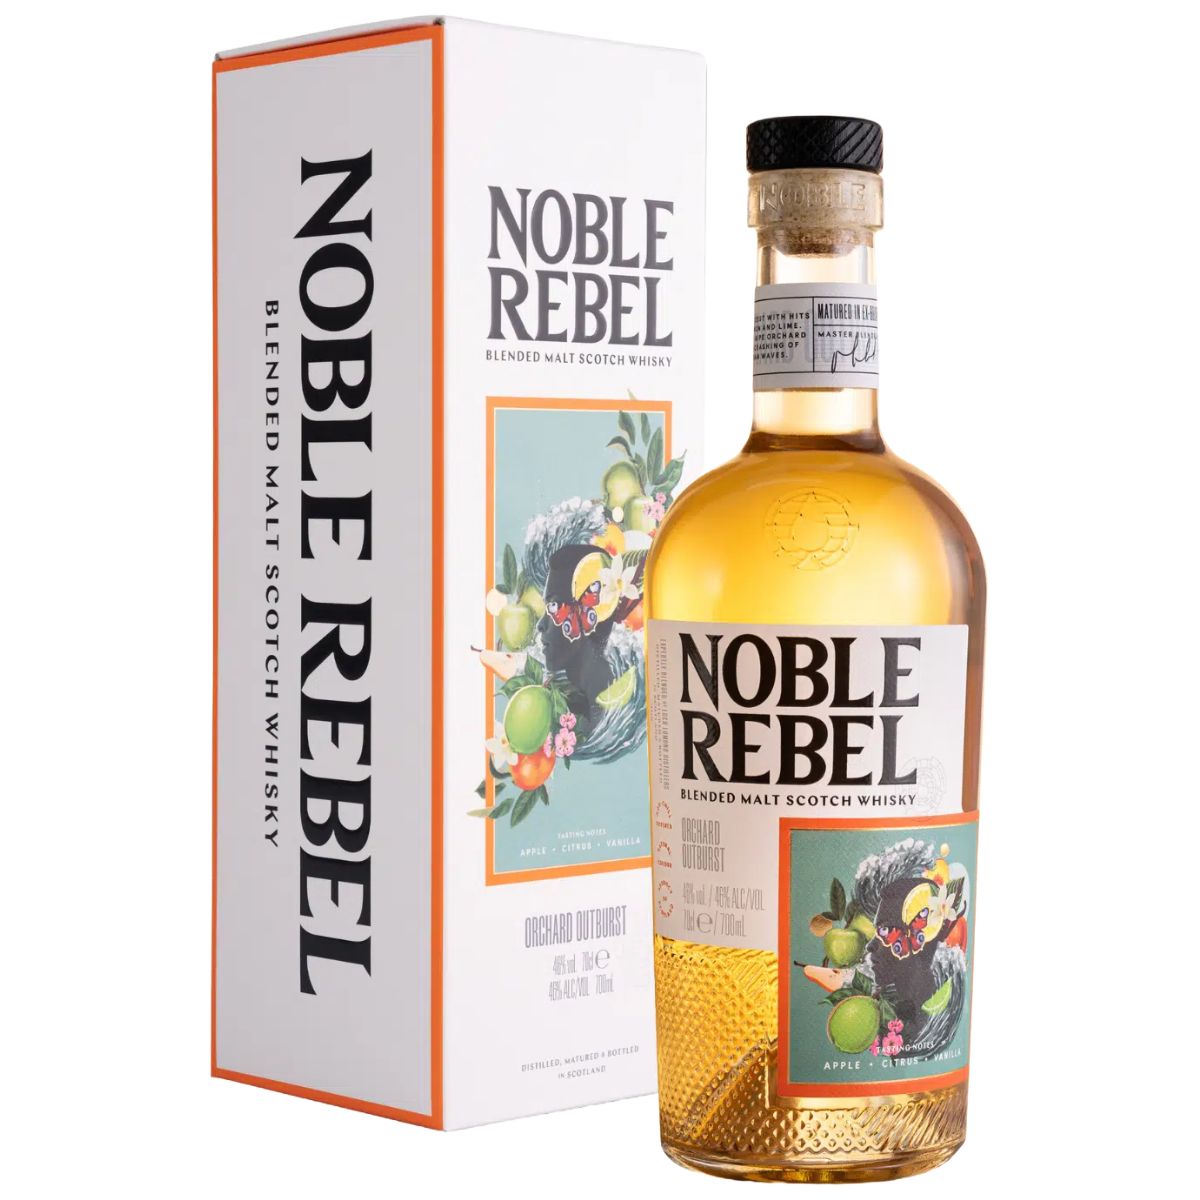 Whisky Noble Rebel - Orchard Outburst - Loch Lomond